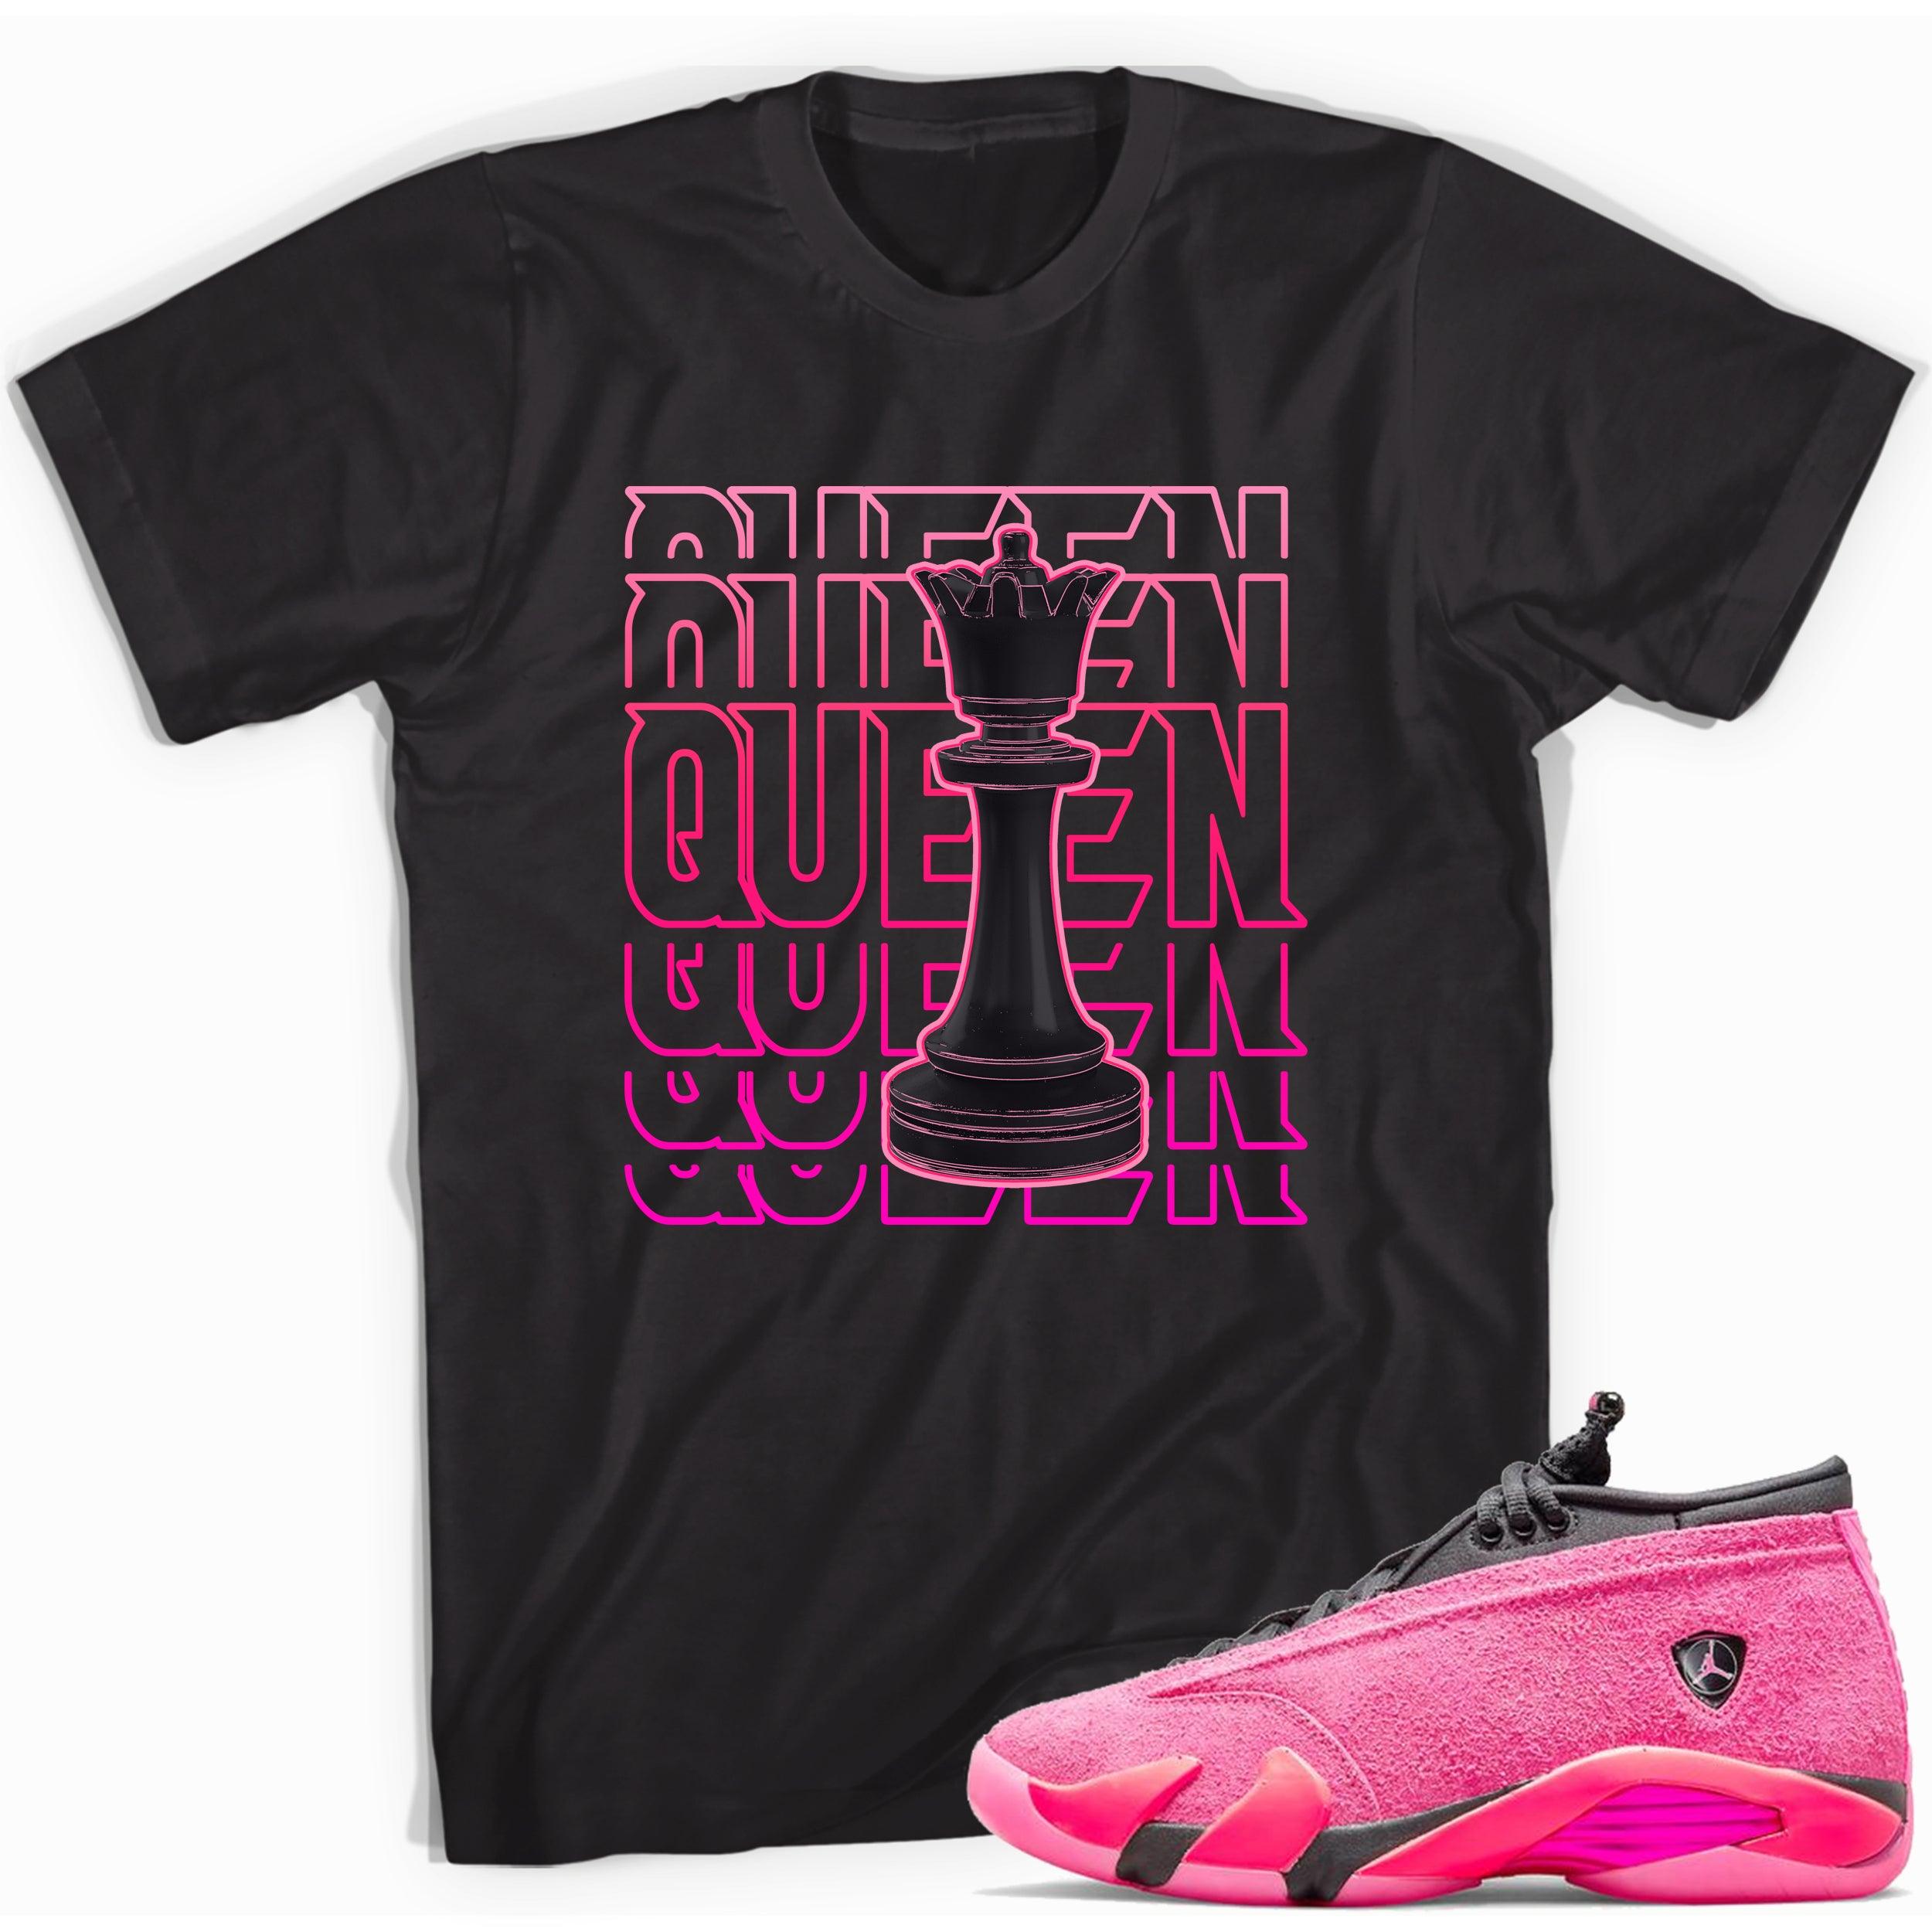 Queen Shirt AJ 14s Low Shocking Pink photo